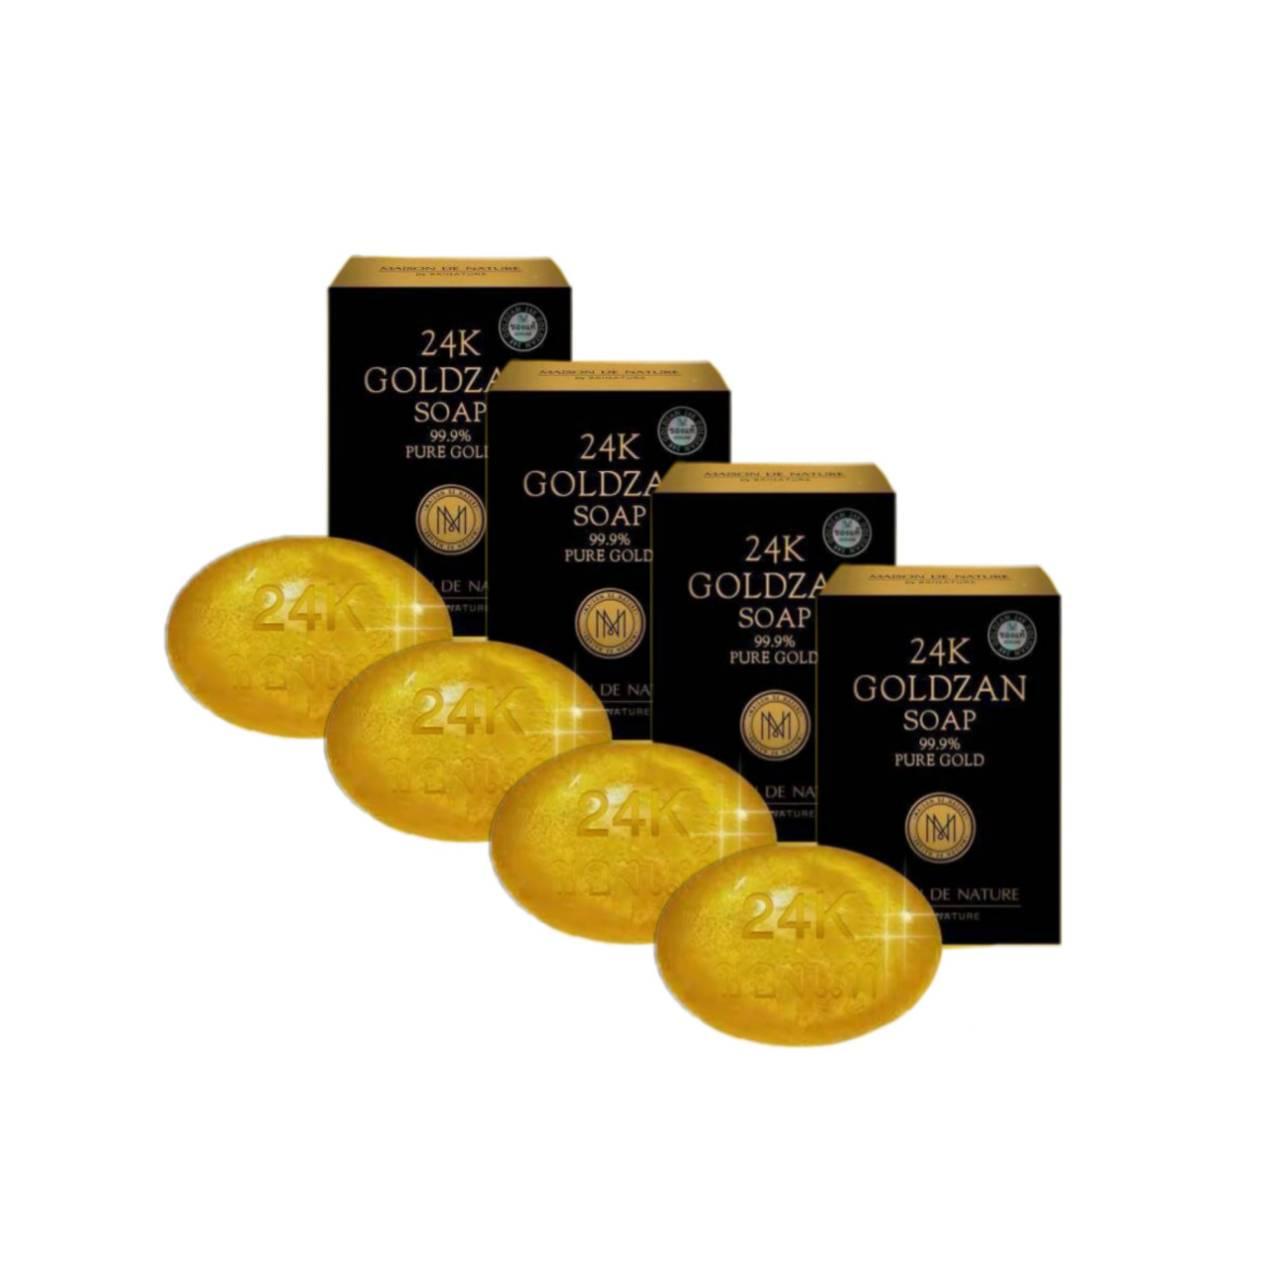 24K Goldzan Soap 99.99% Pure Gold 100g. ( 4 ก้อน )